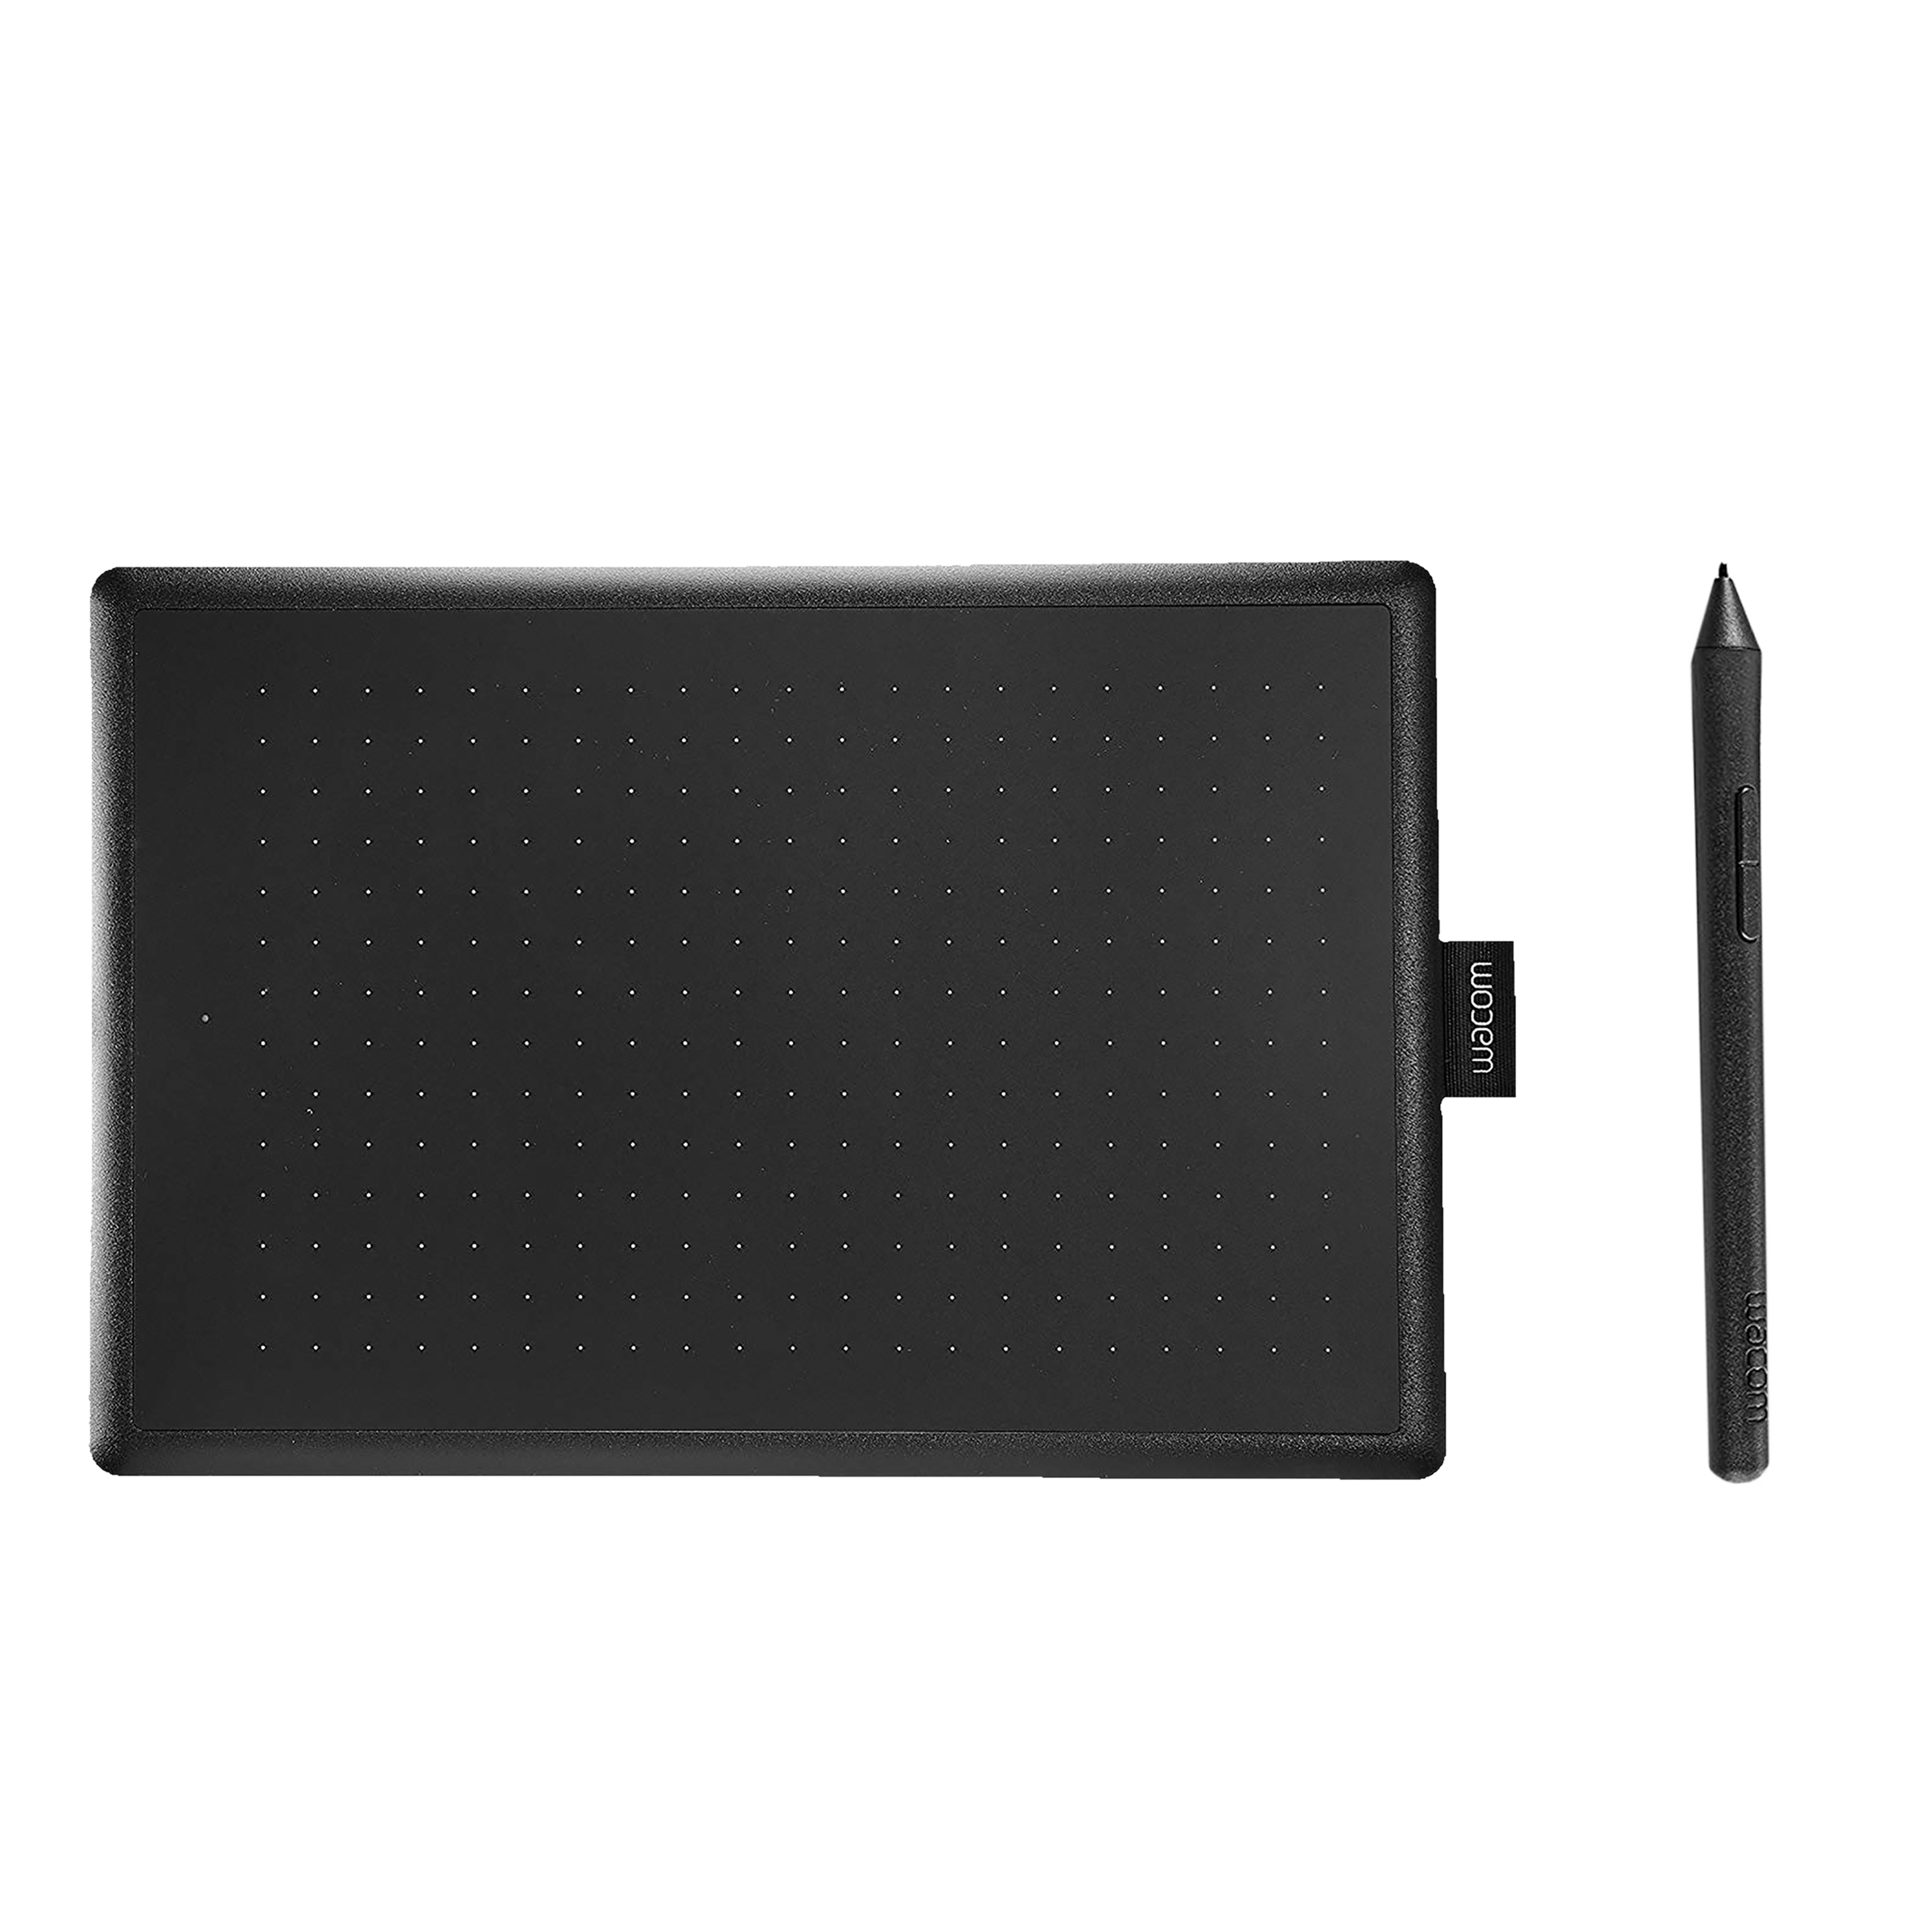 Diy Honkai Impact 3 Elysia Theme Osu Tablet Cover Sheet Protective Film For  Wacom Ctl-471 Digital Graphic Drawing Tablet Pad - Screen Protectors -  AliExpress